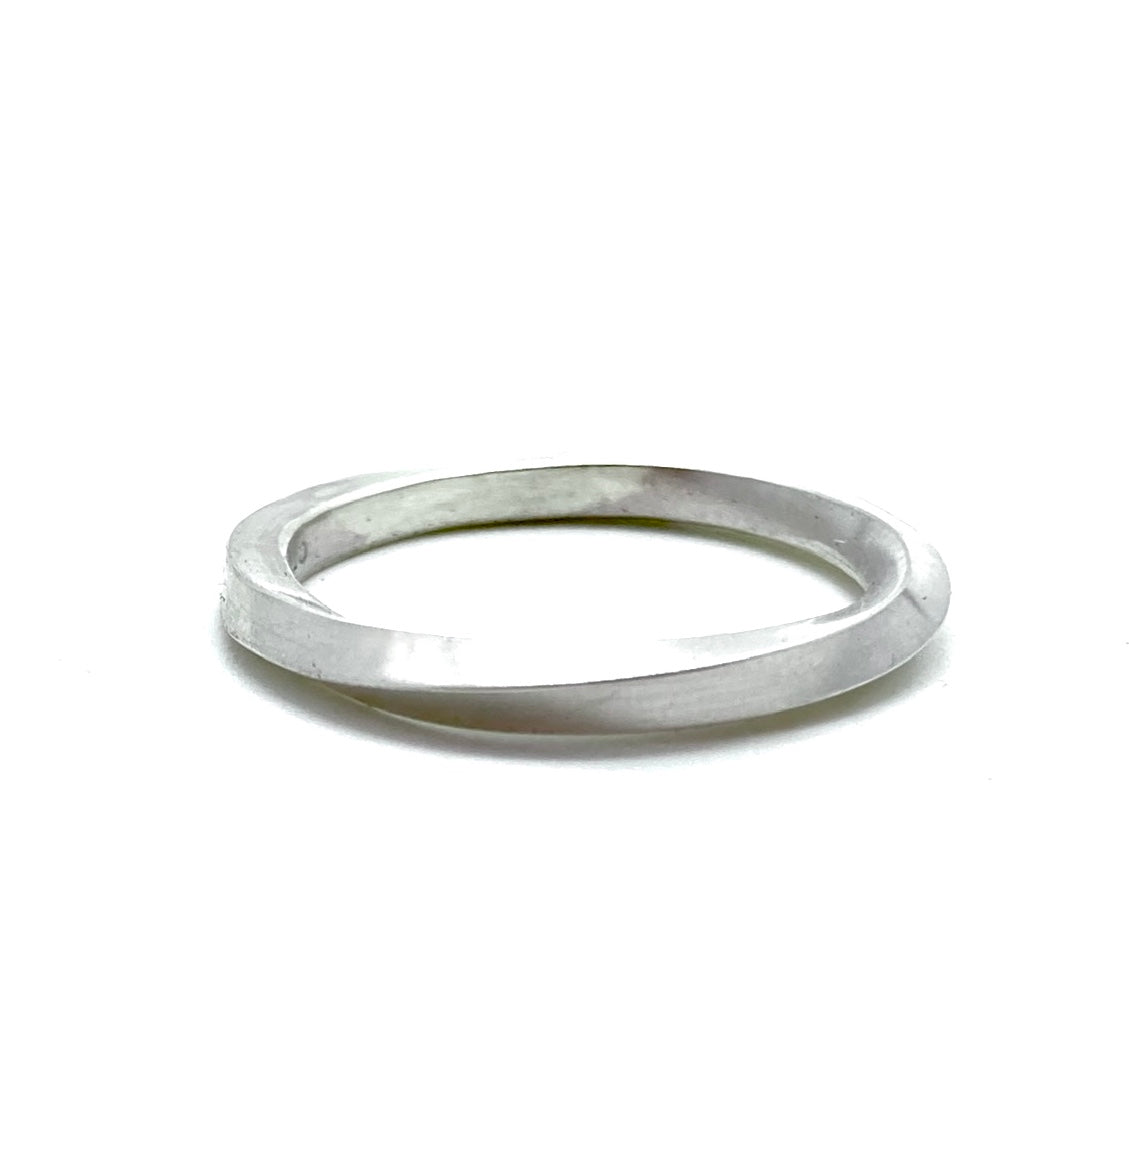 Möbius Ring in Sterling Silver